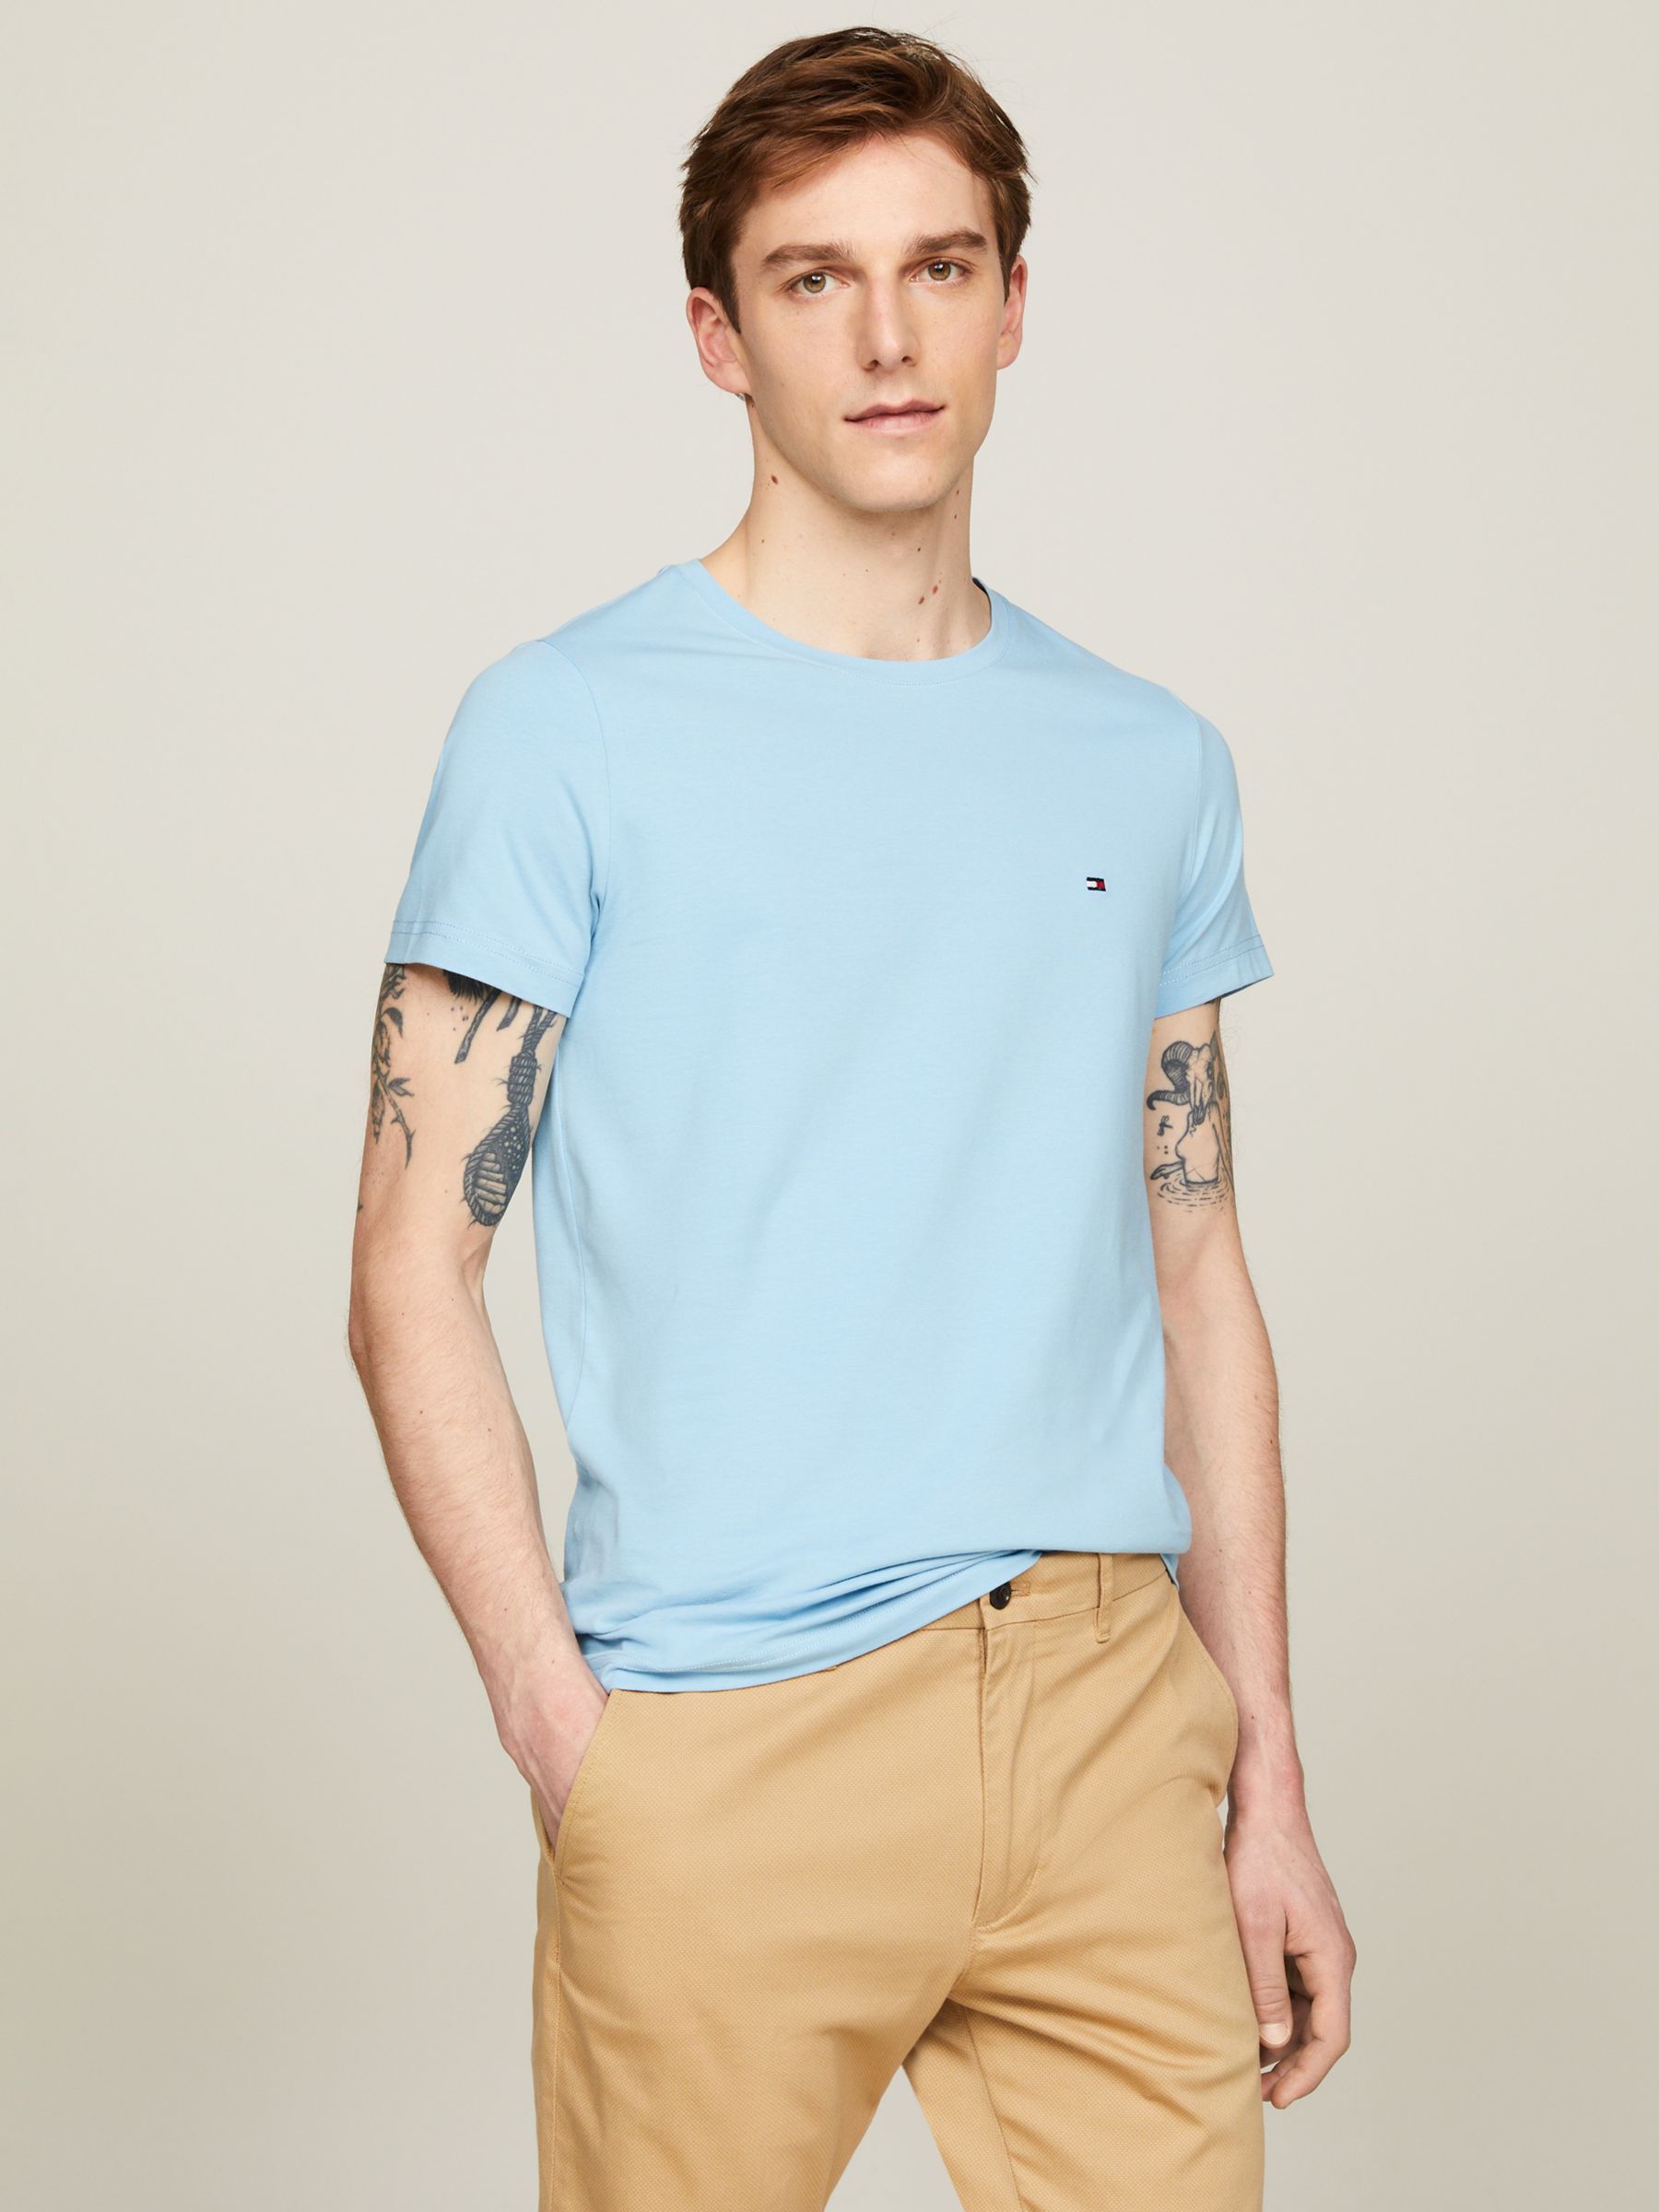 Tommy Hilfiger Stretch Slim Fit T-Shirt, Sleepy Blue, XS